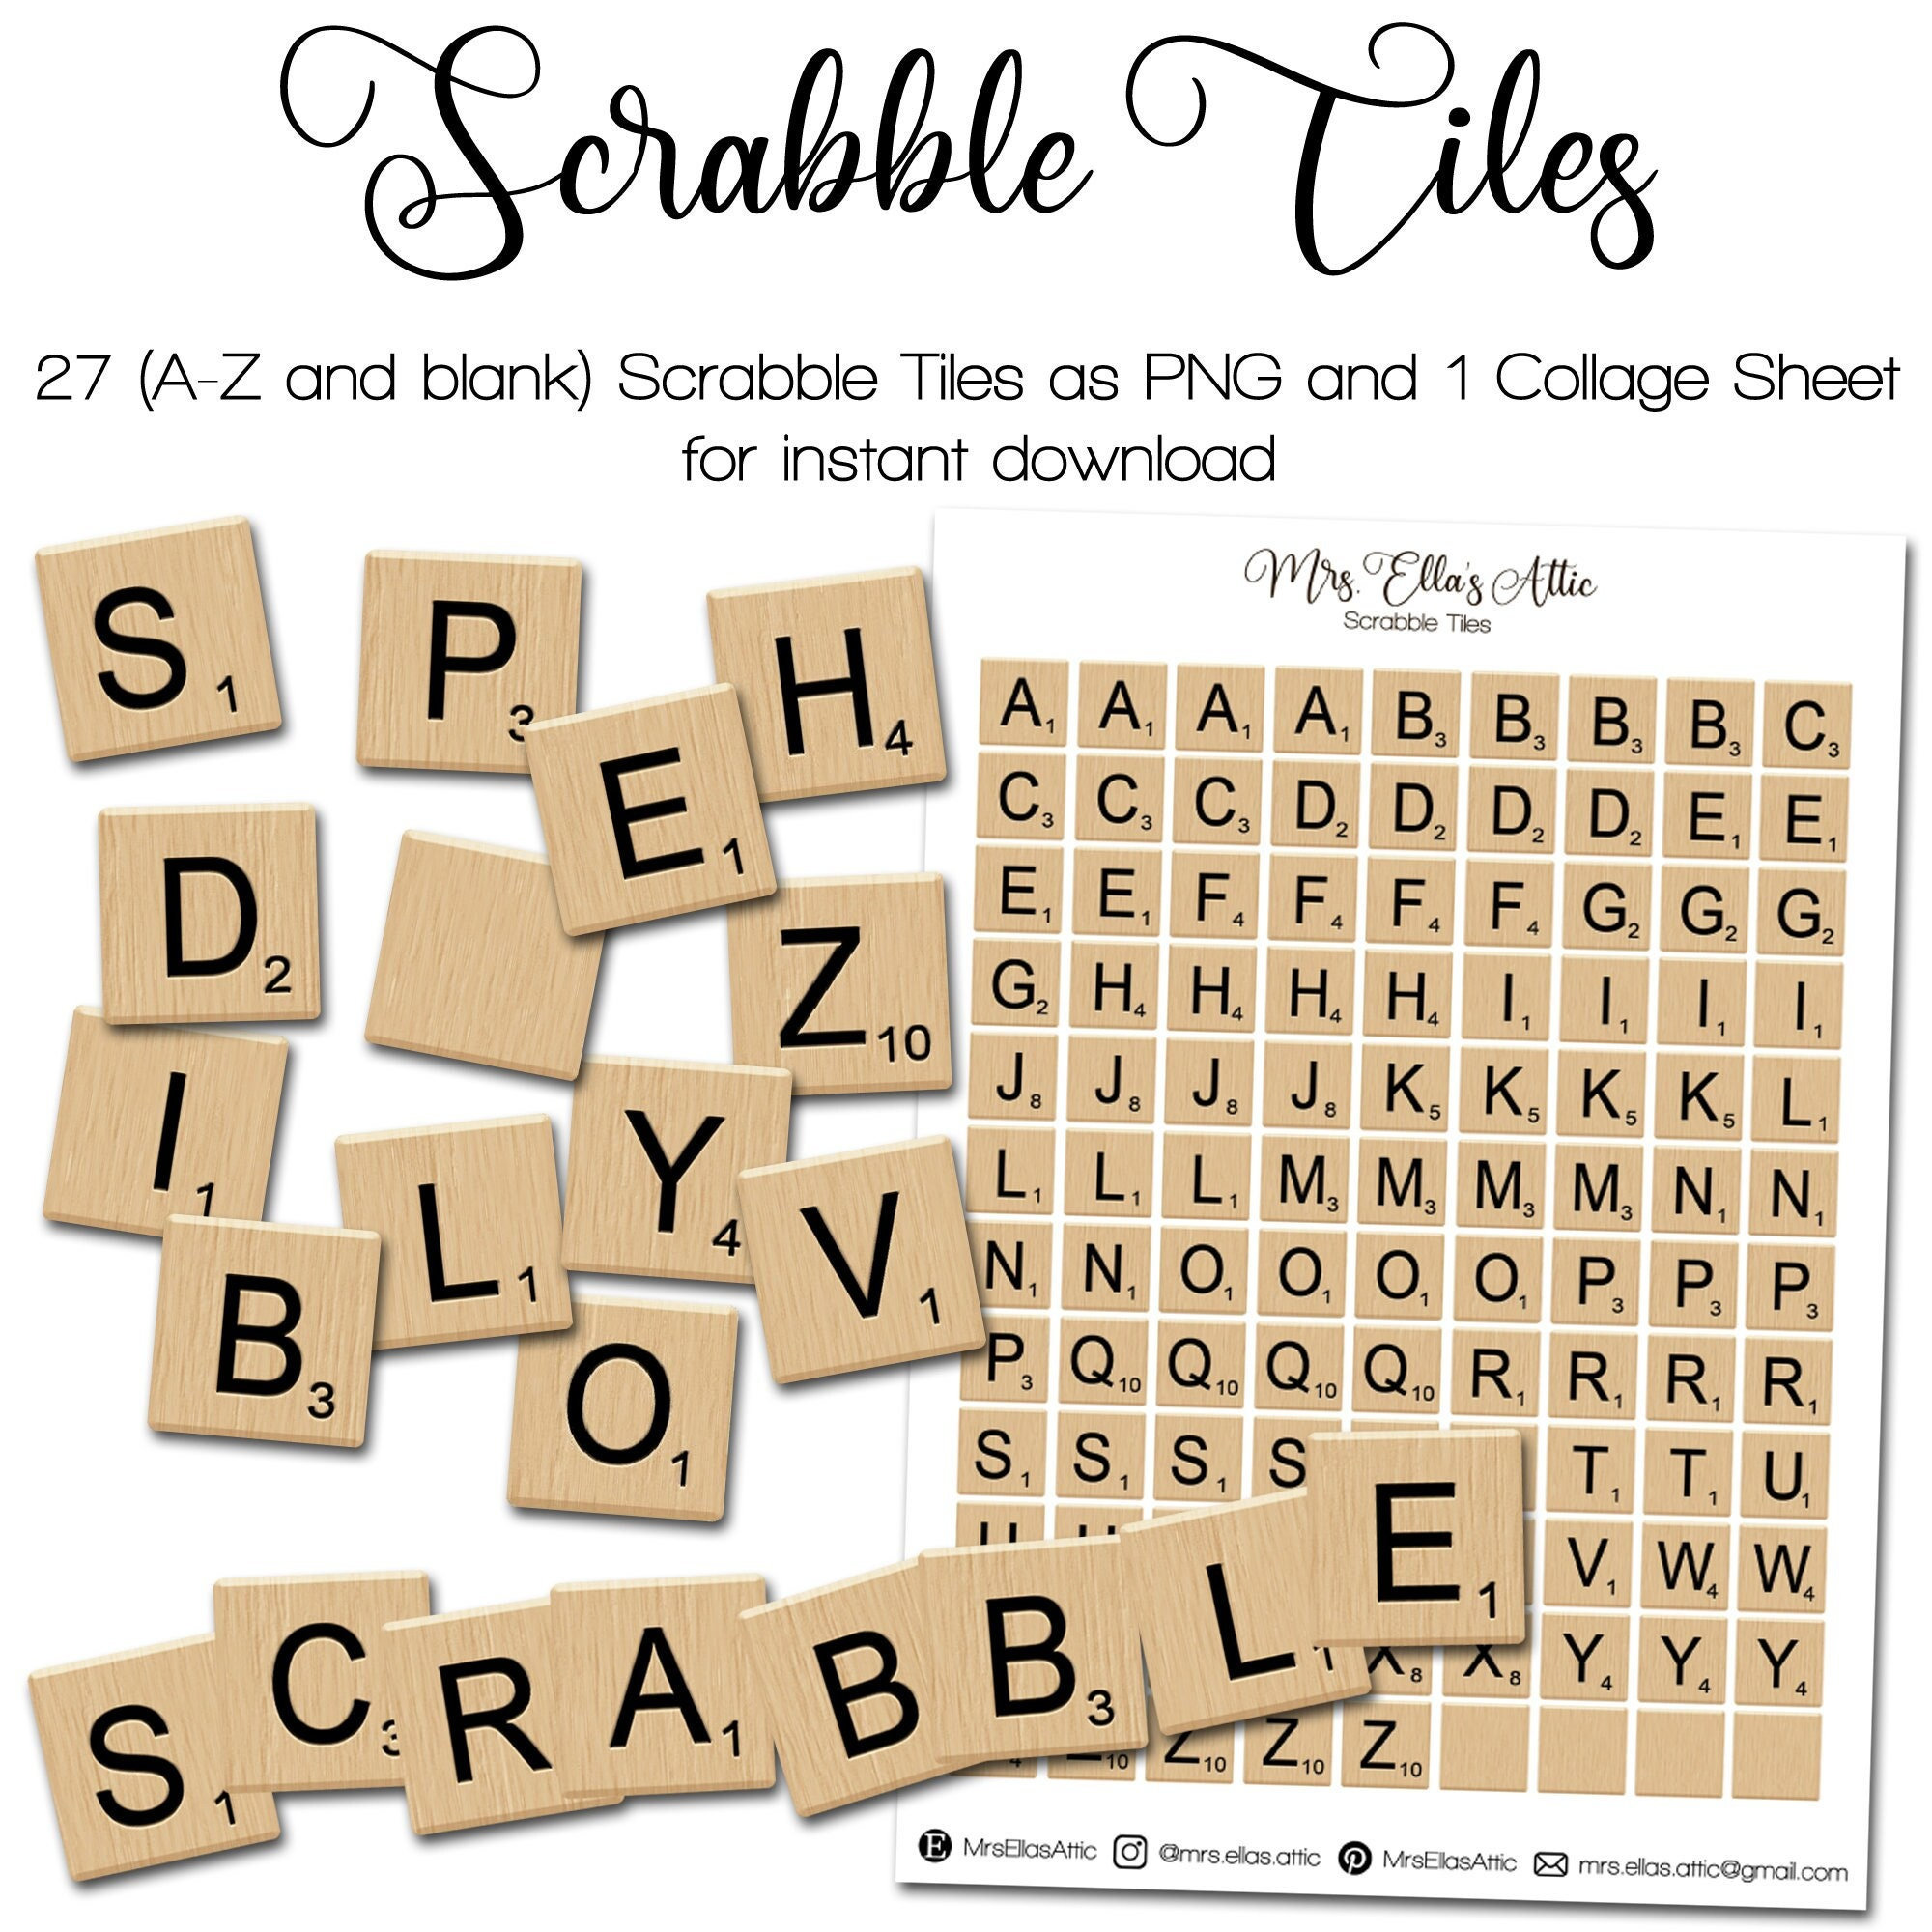 REOLAN Scrabble Tile Letter Stencils 4 Inch - 28 Pack Scrabble